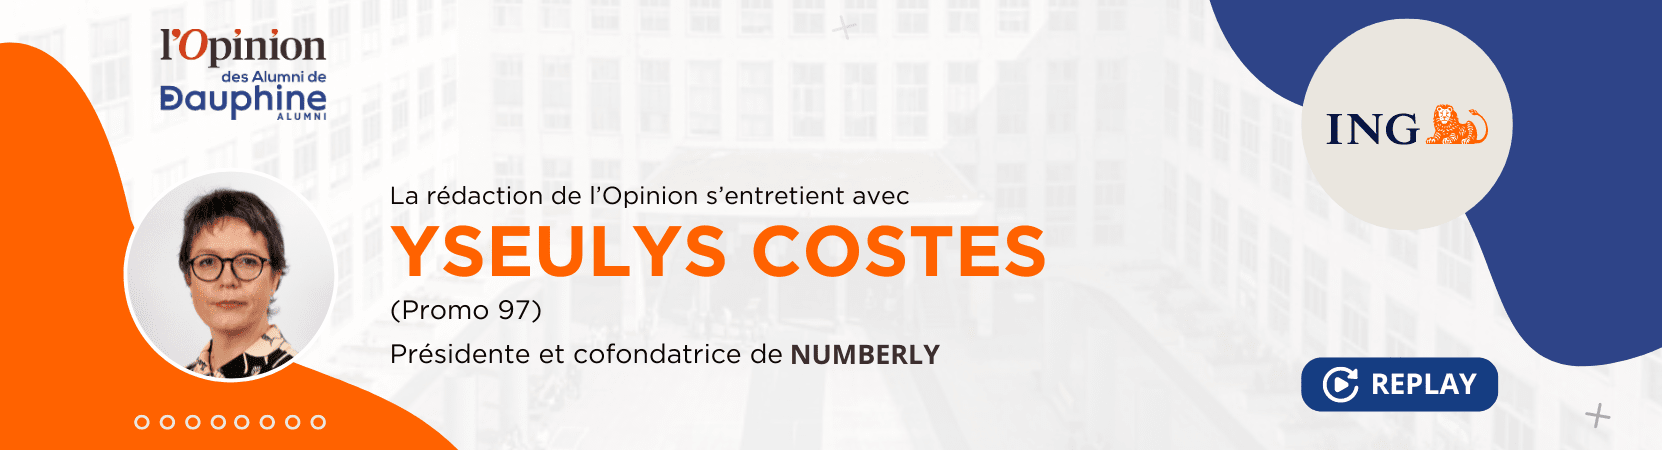 REPLAY - L'Opinion des Alumni de Dauphine avec Yseulys Costes